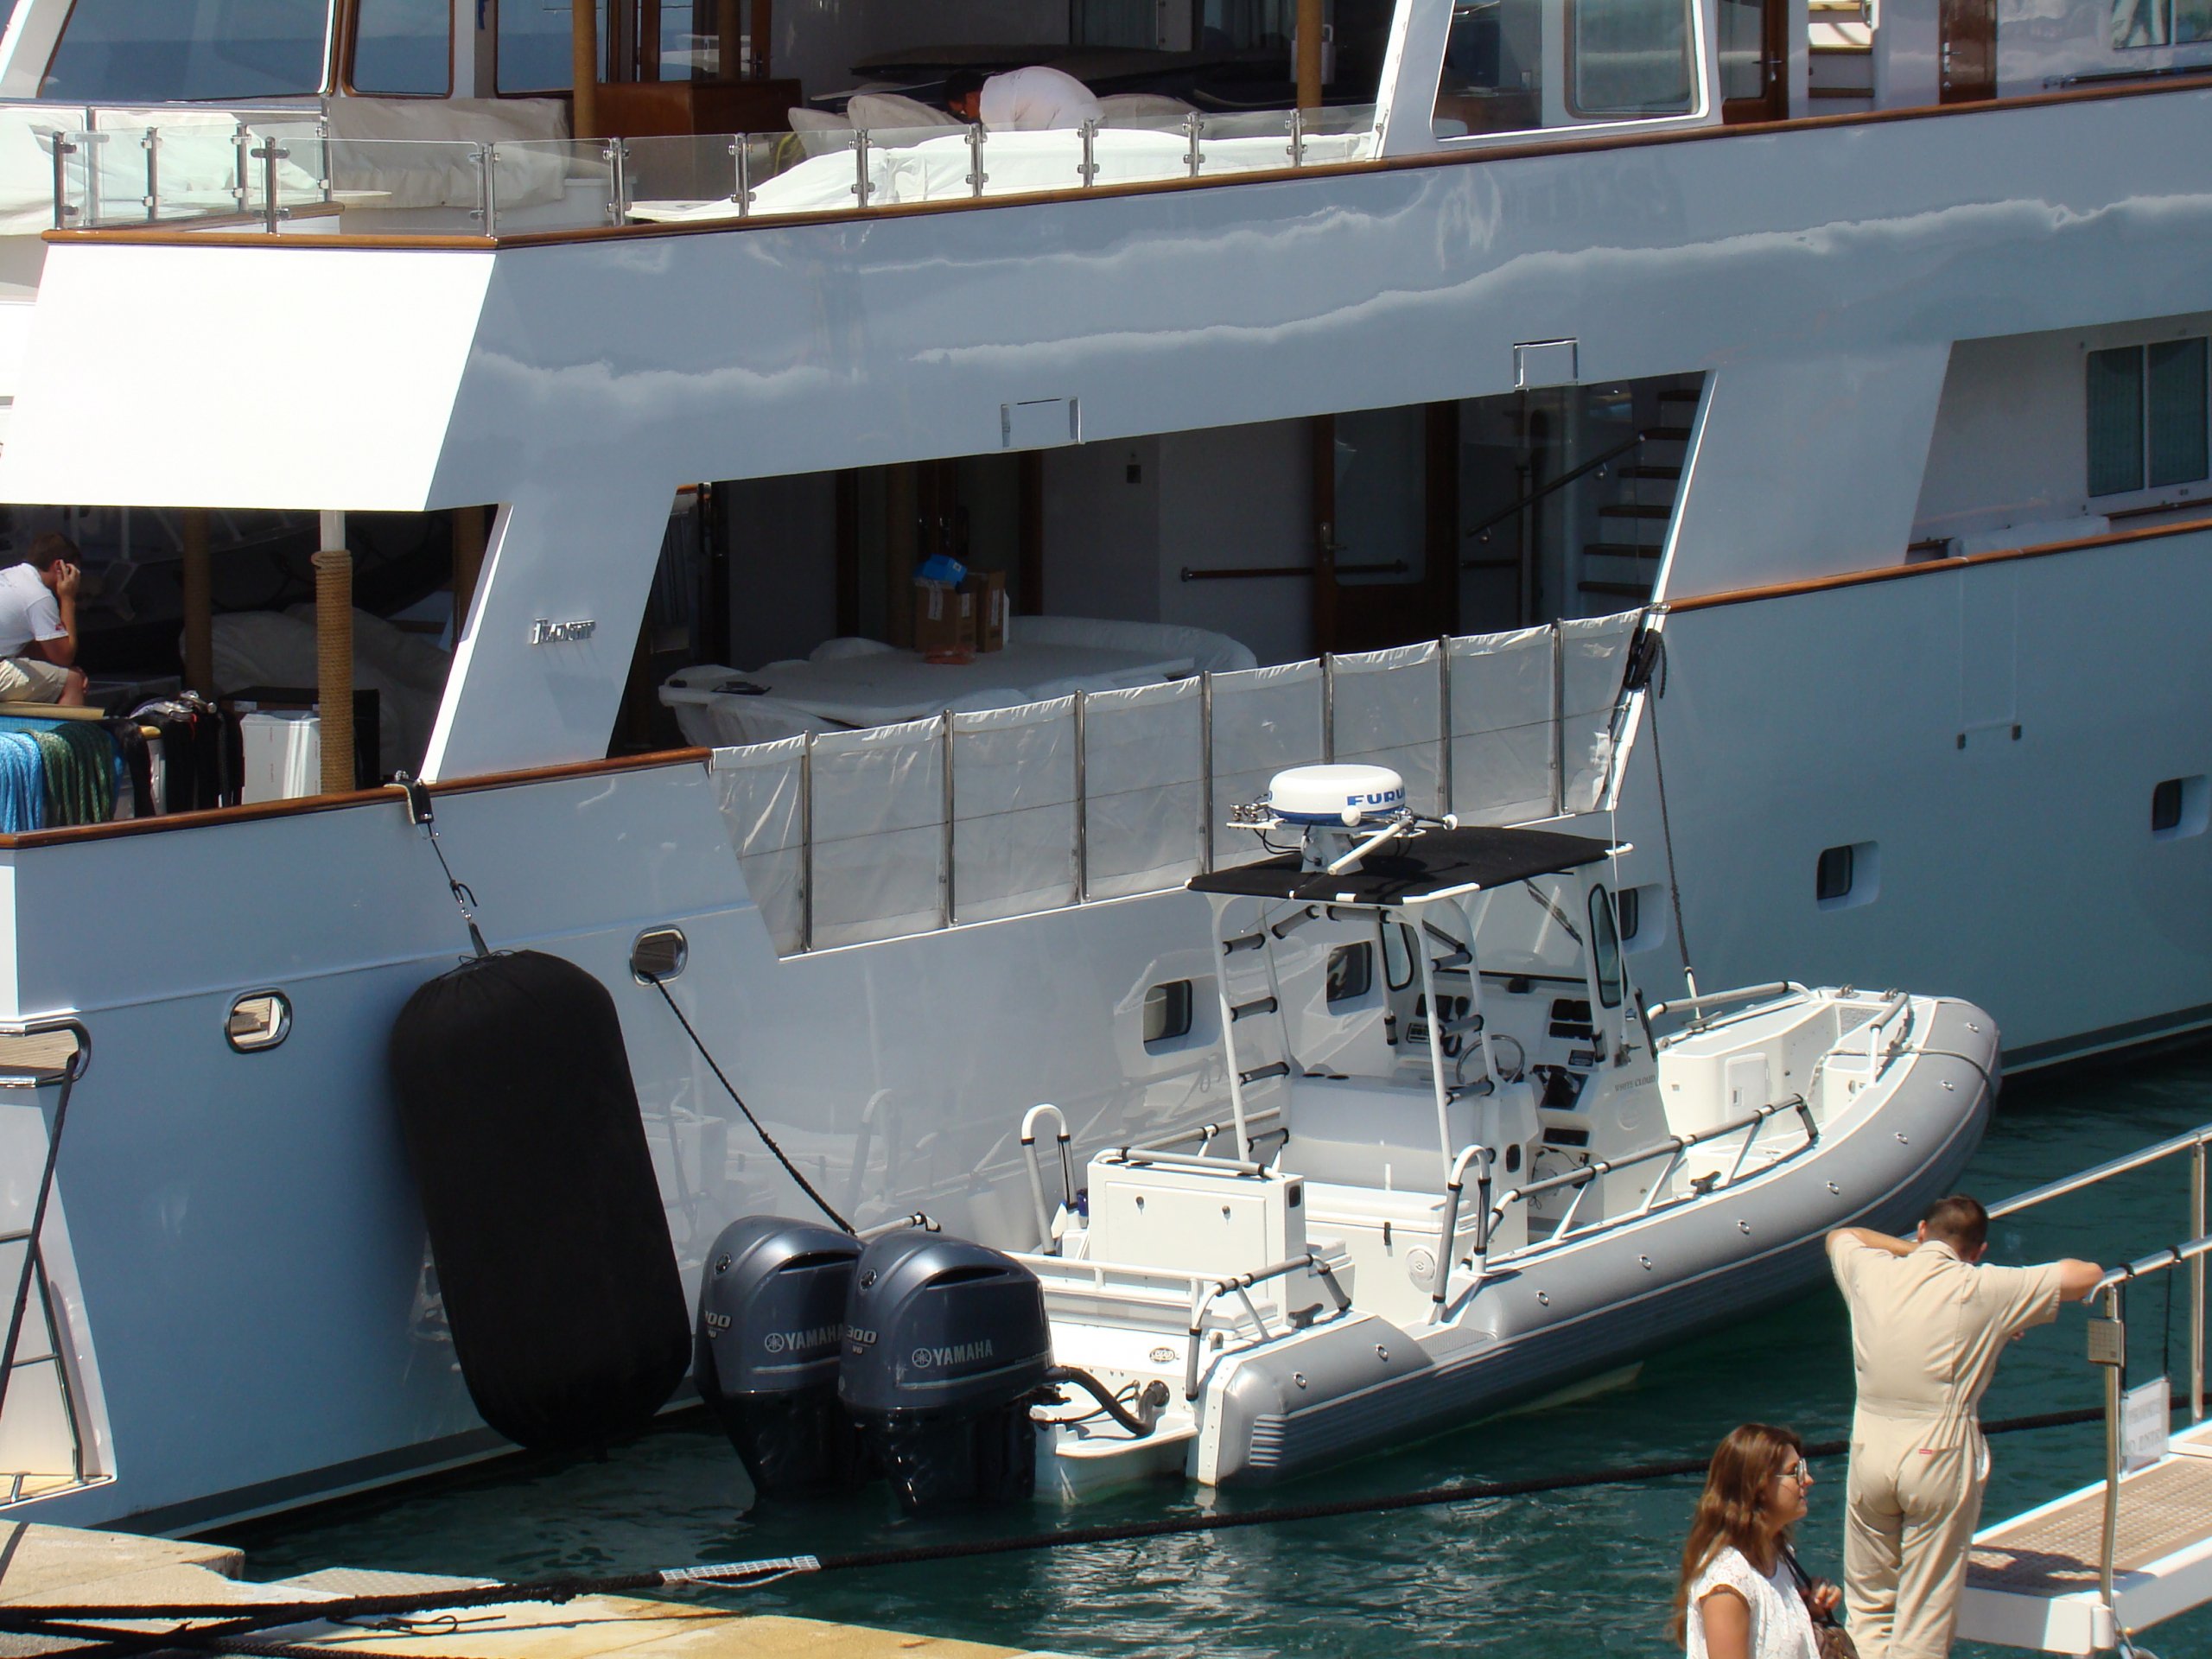 Falcon Lair yacht tender